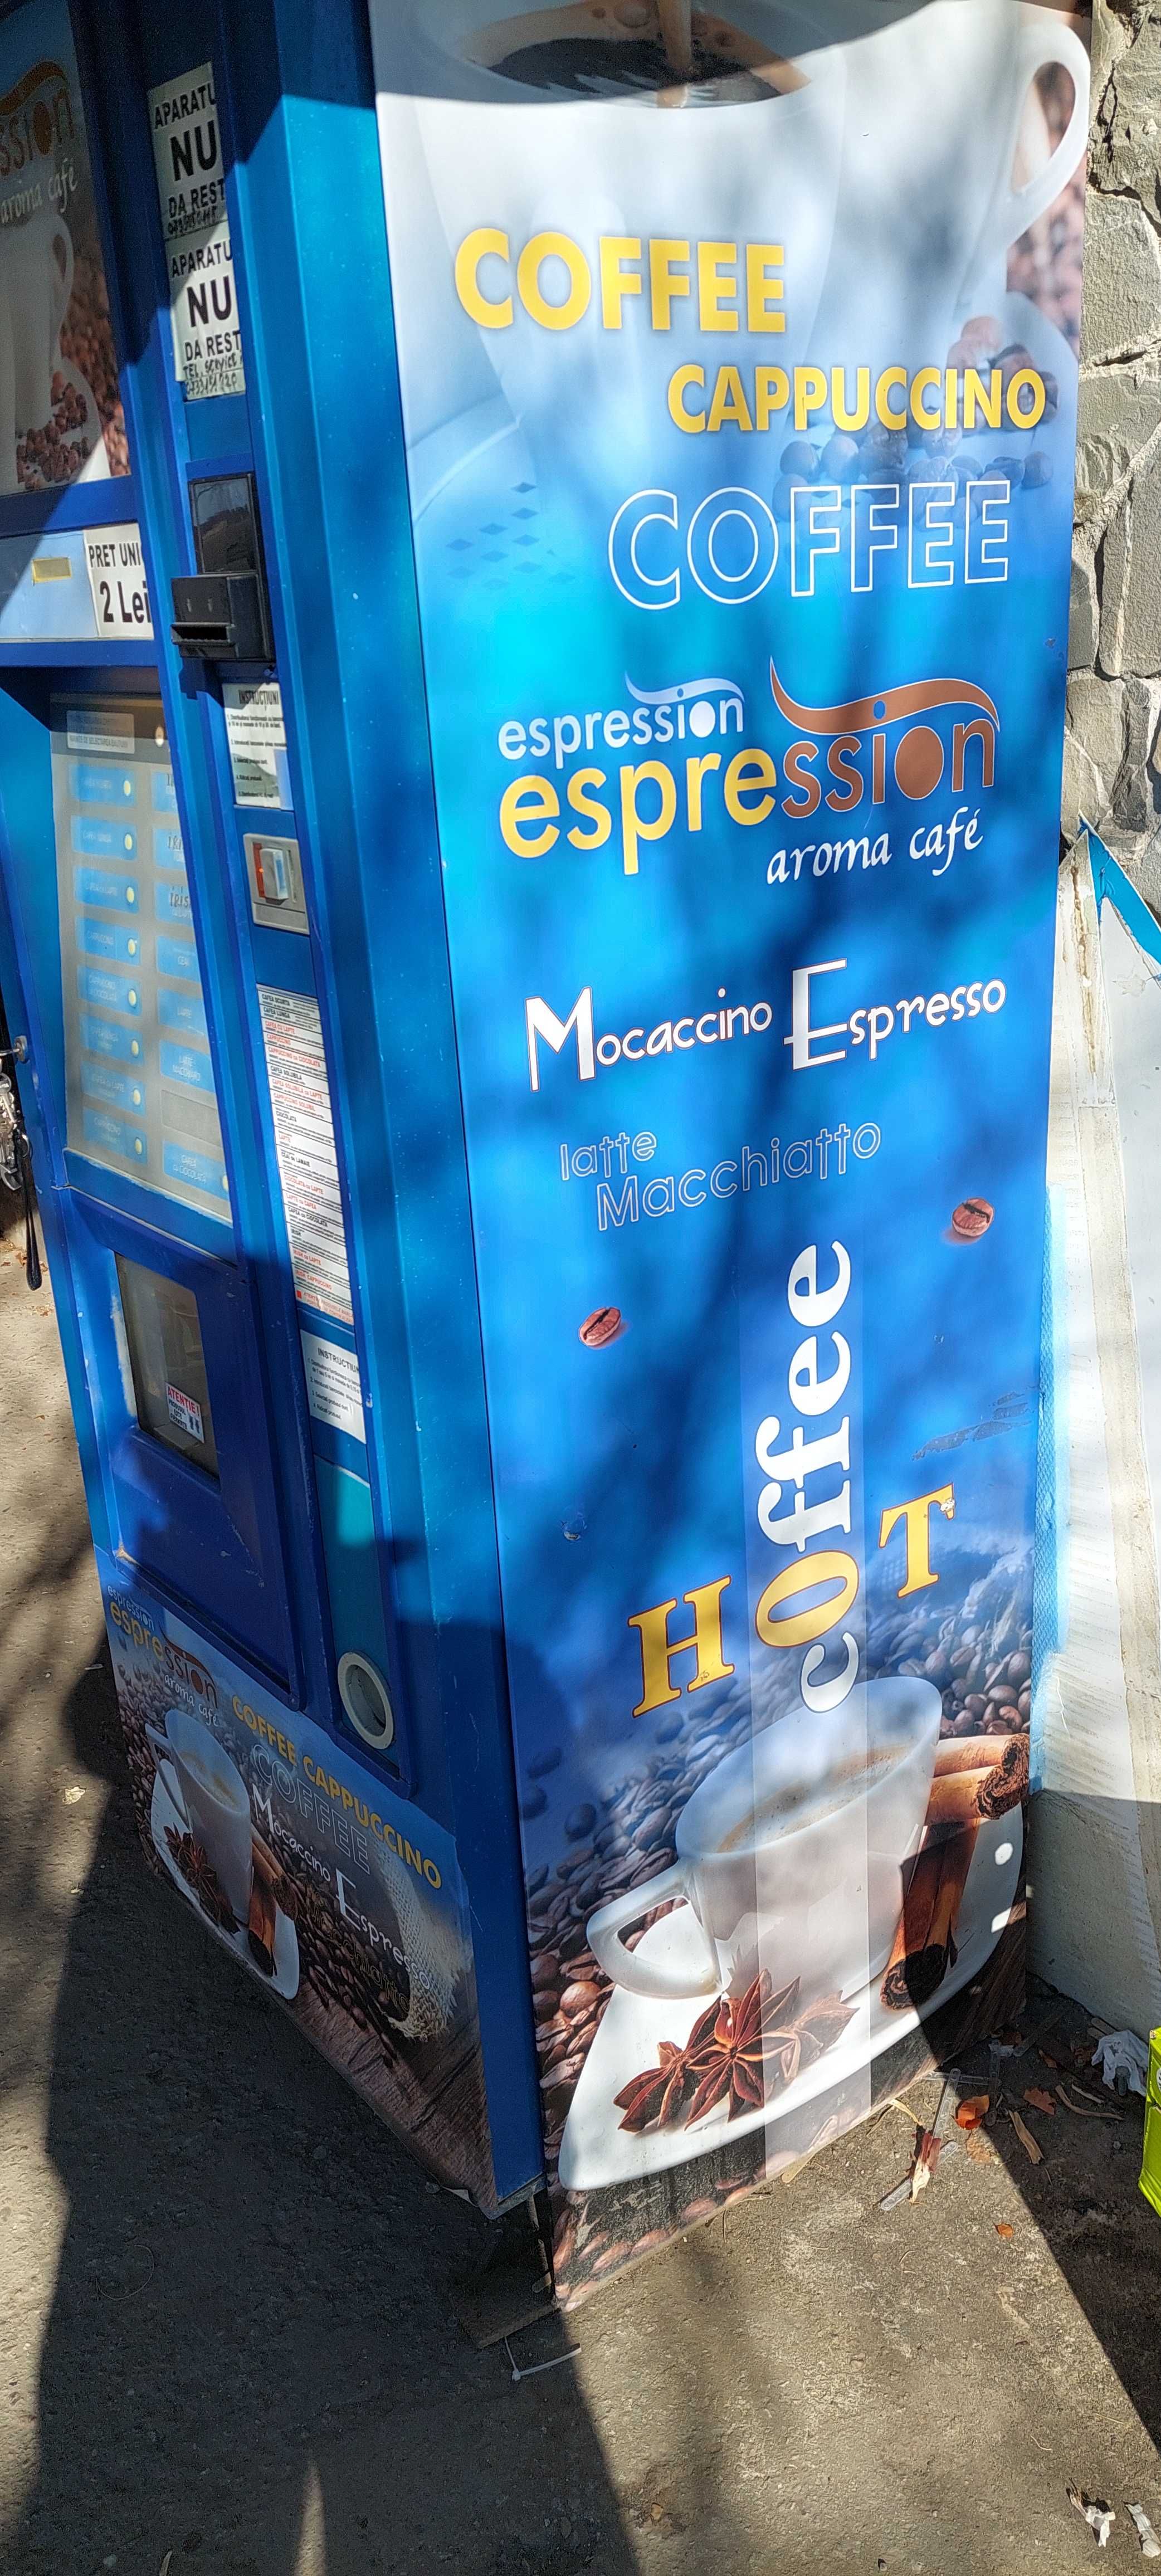 Vând automat cafea boabe Necta Spazio